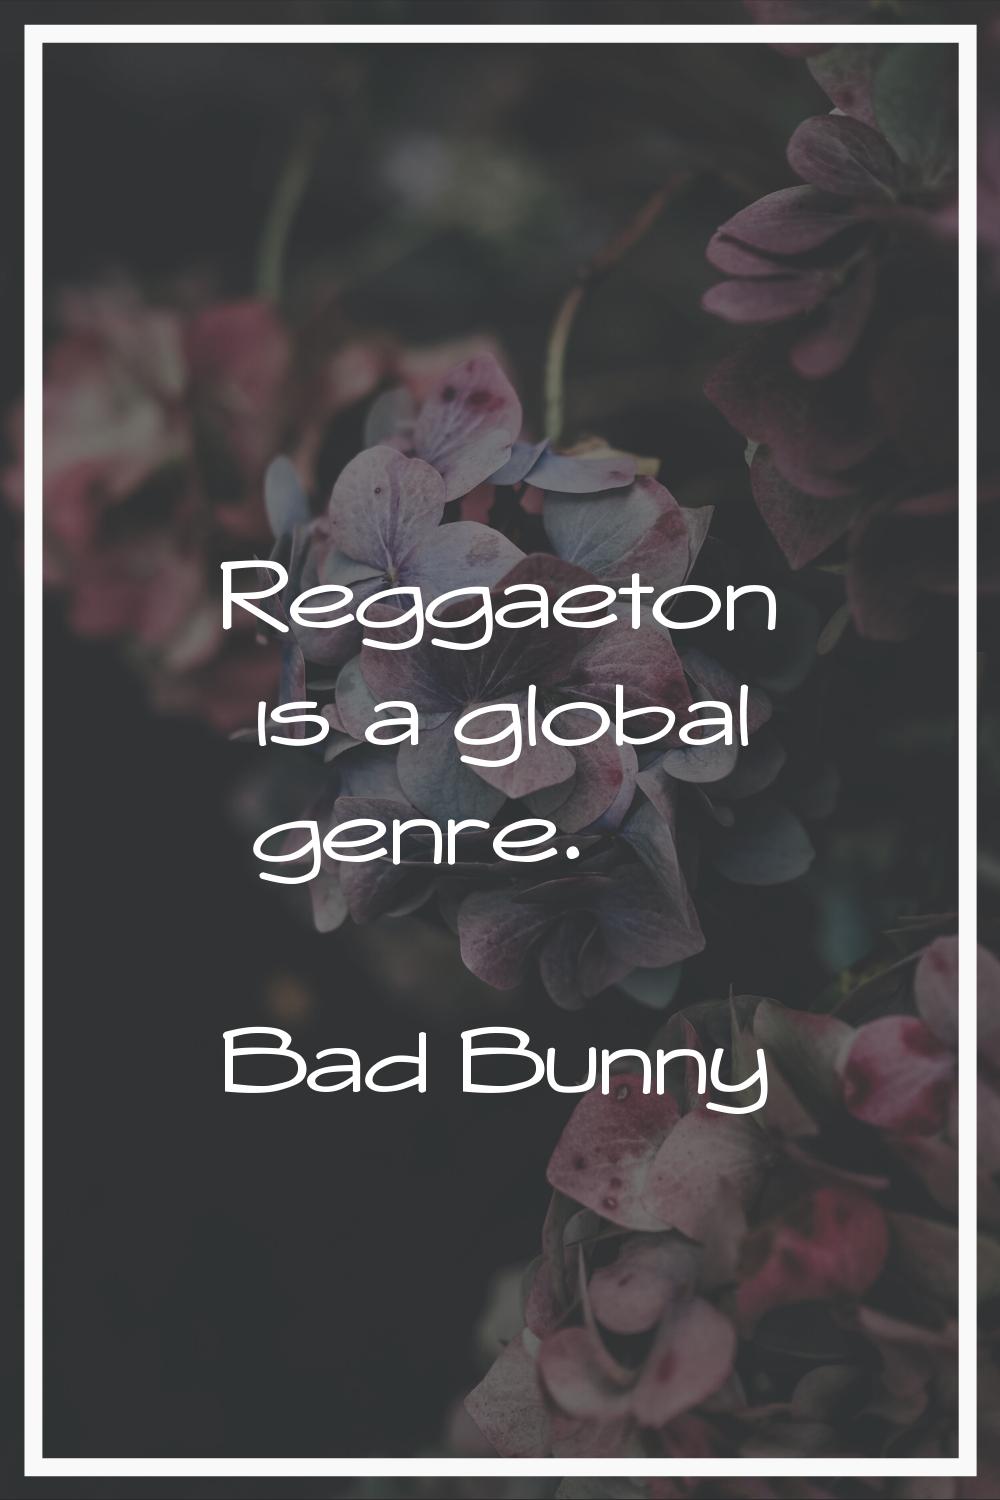 Reggaeton is a global genre.